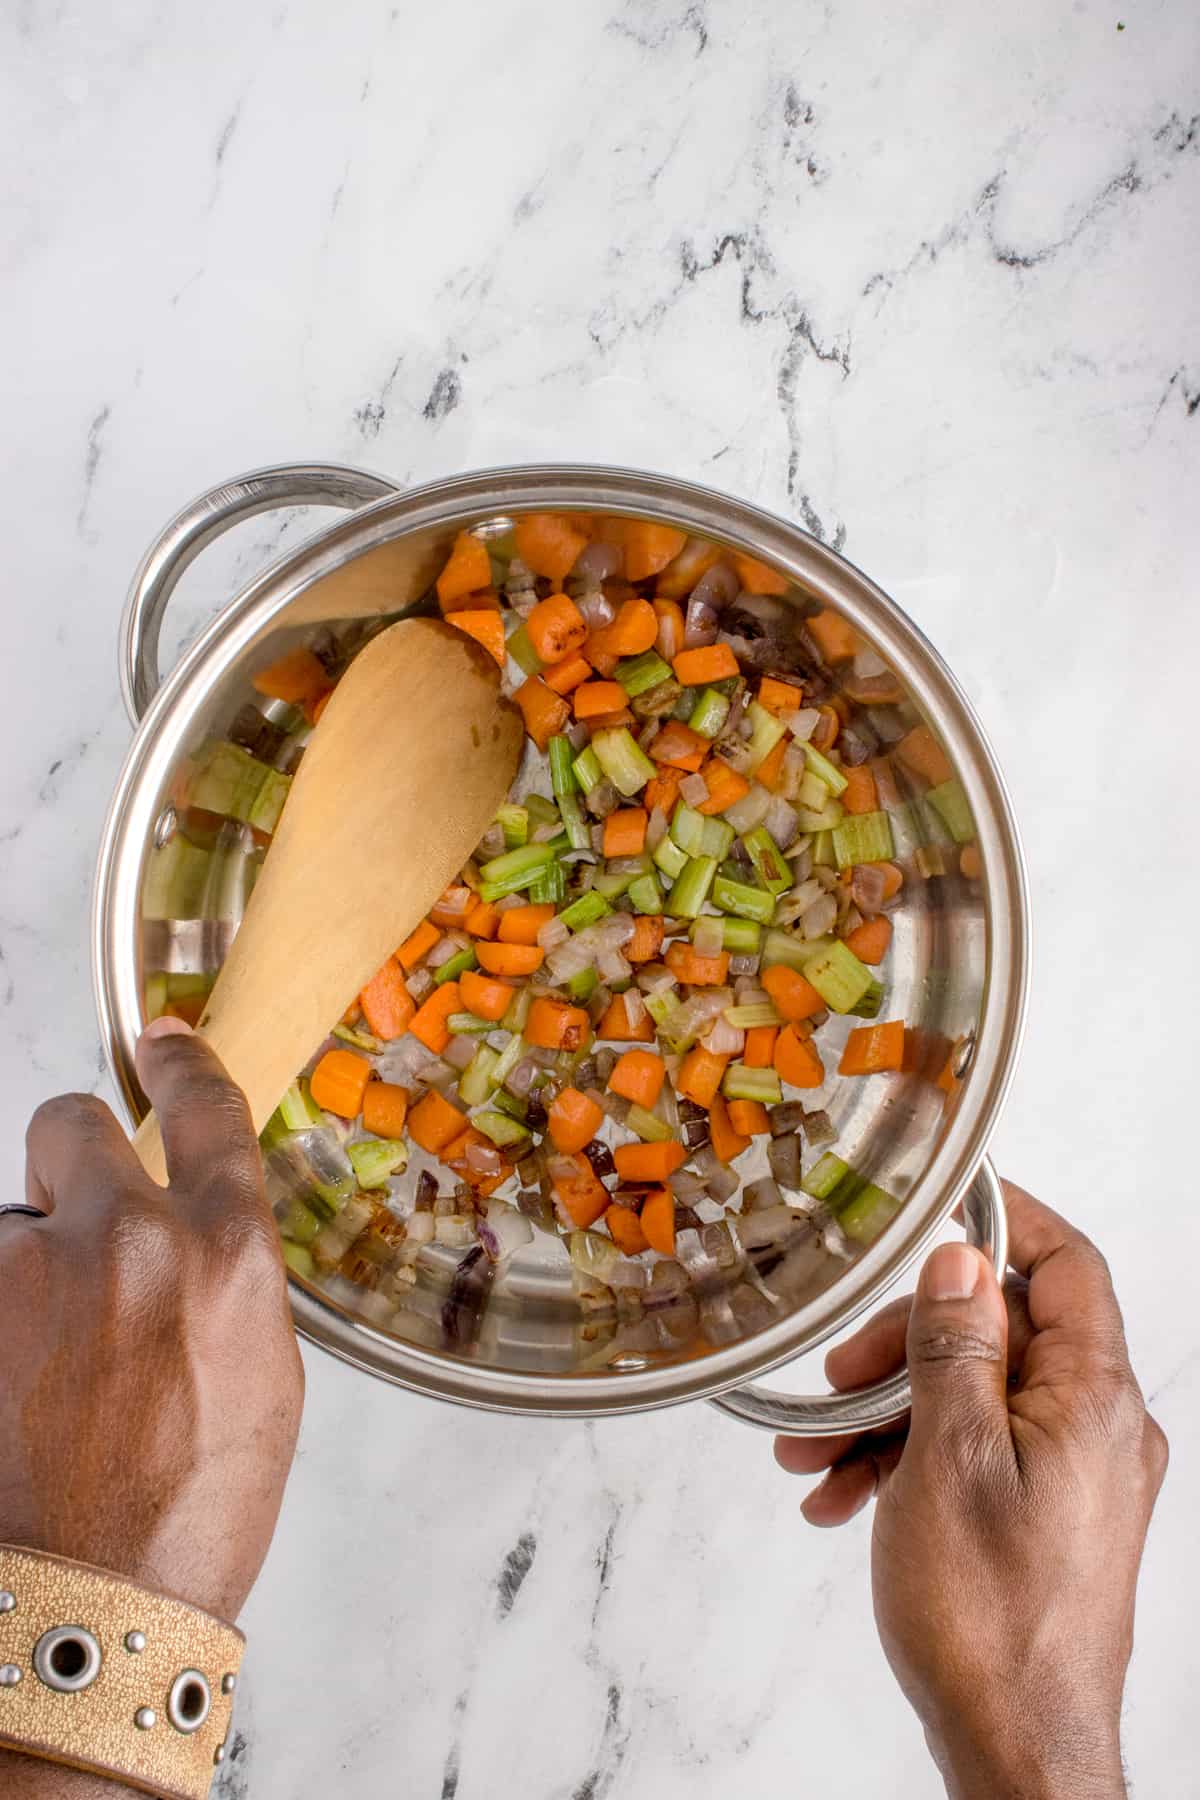 Hands mixing veggies in a cooking pot. 